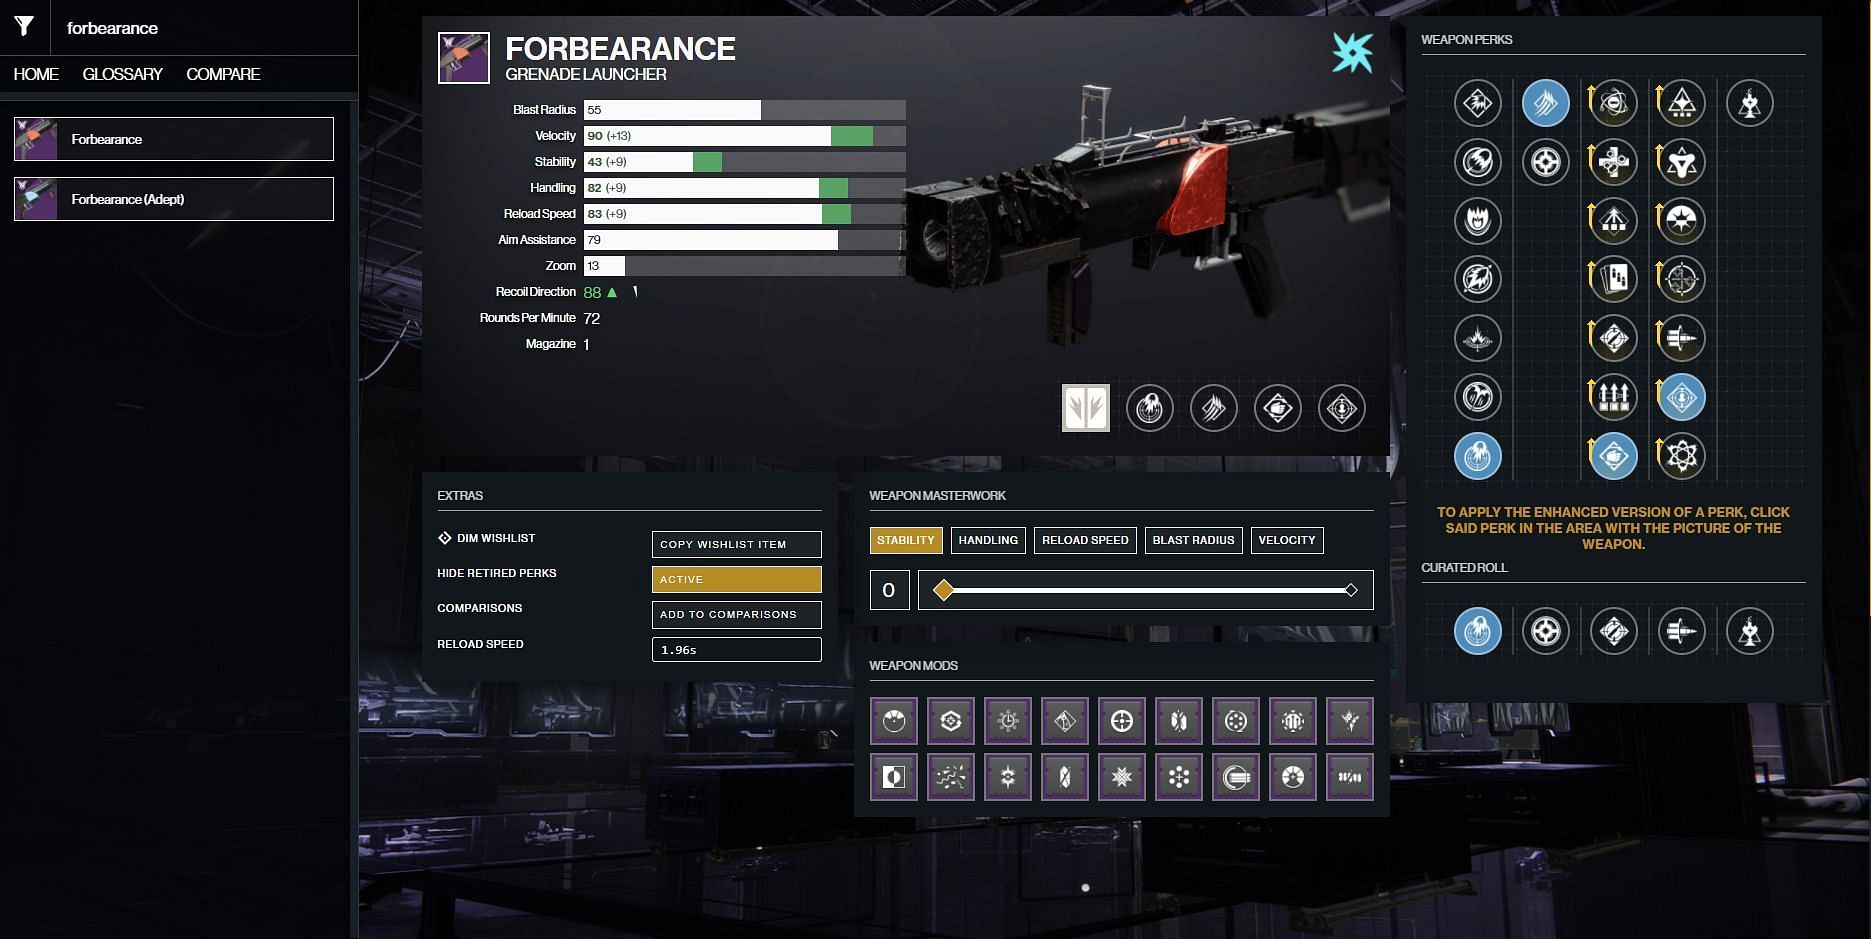 Forbearance PvP god roll (Image via Destiny 2)